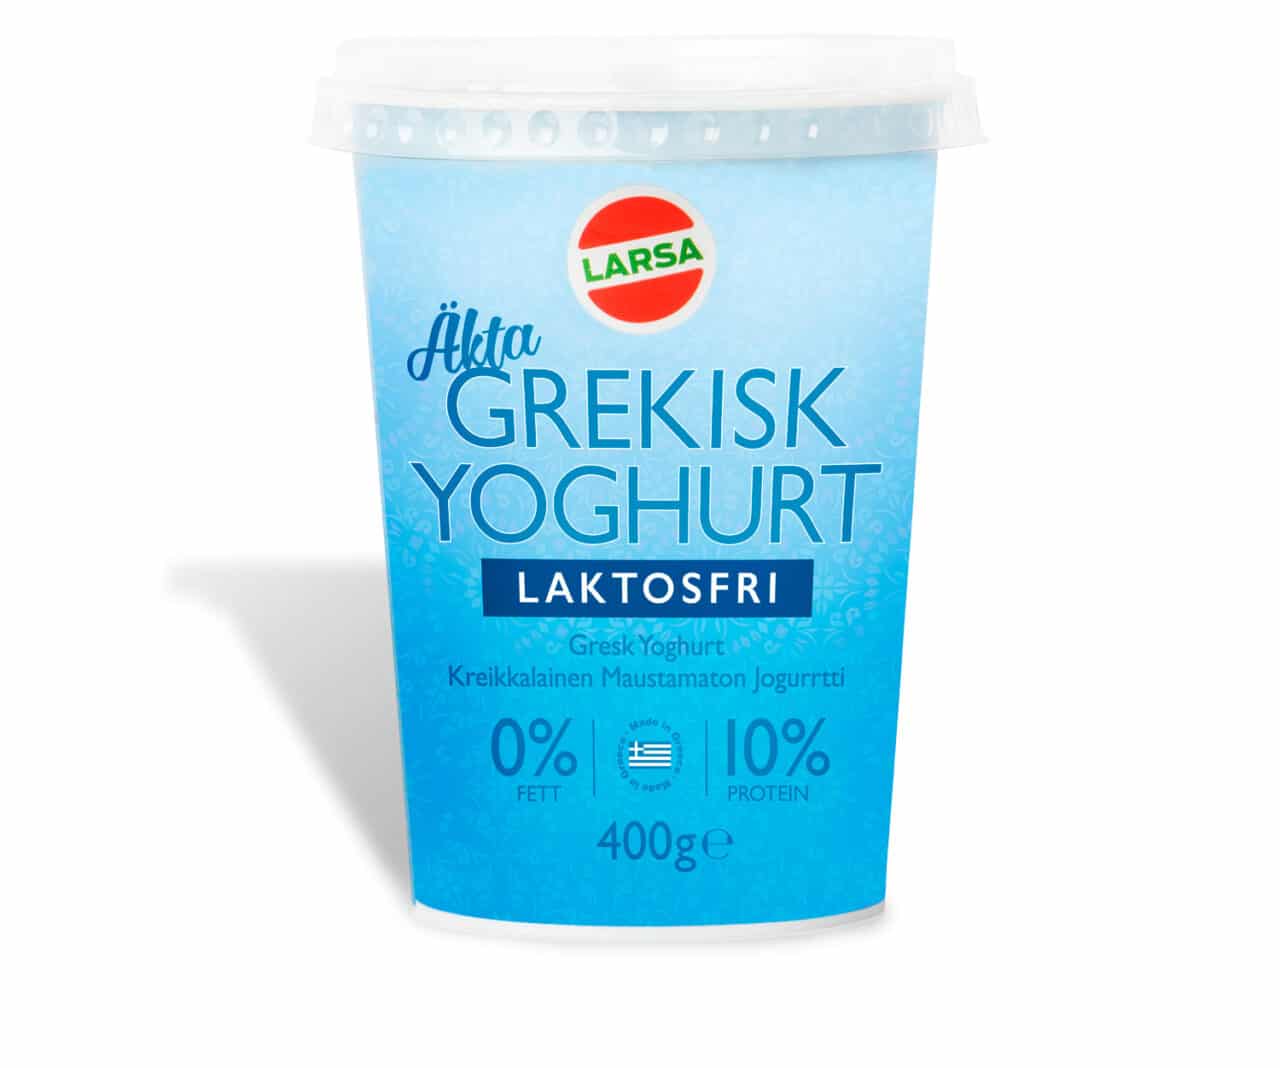 Laktosfri_Grekisk_Yoghurt_0%_400g